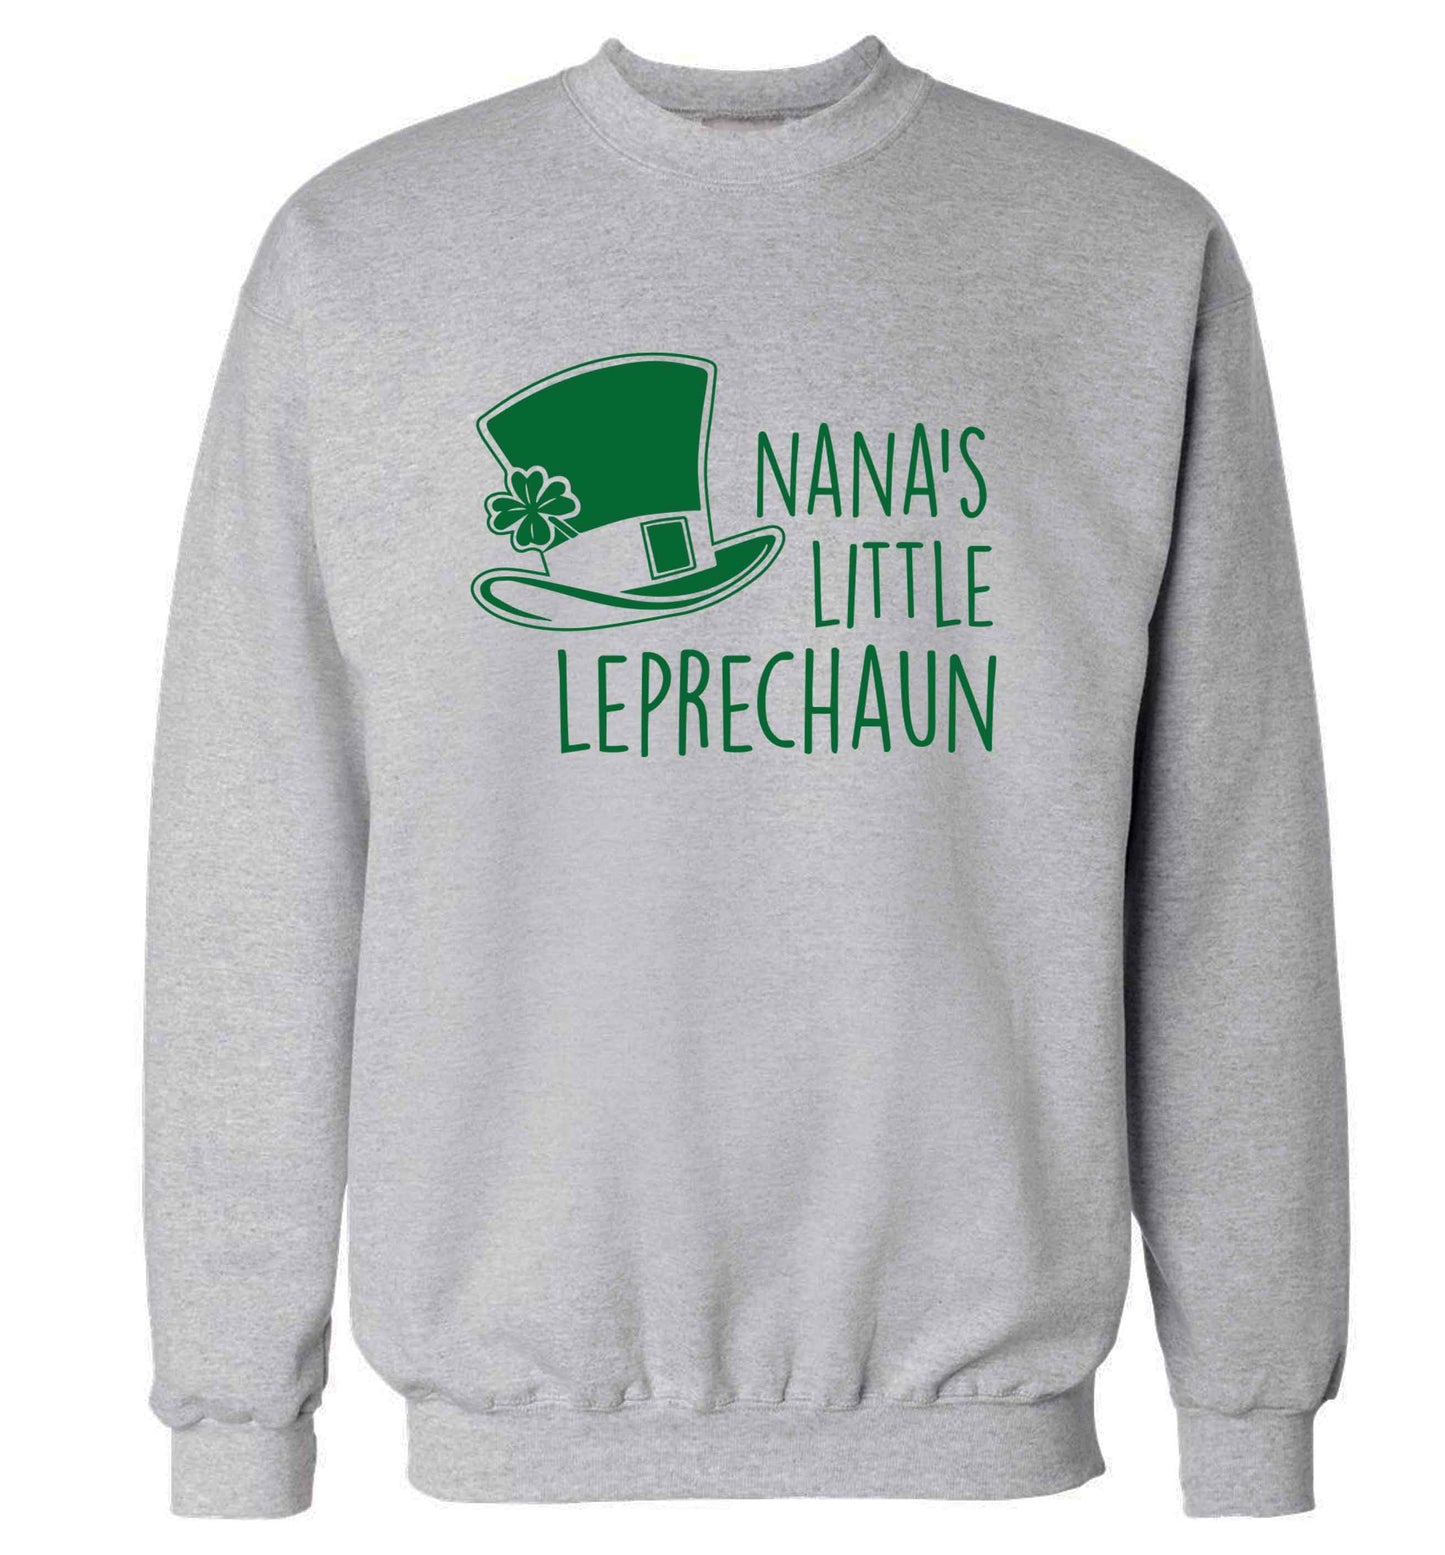 Nana's little leprechaun adult's unisex grey sweater 2XL